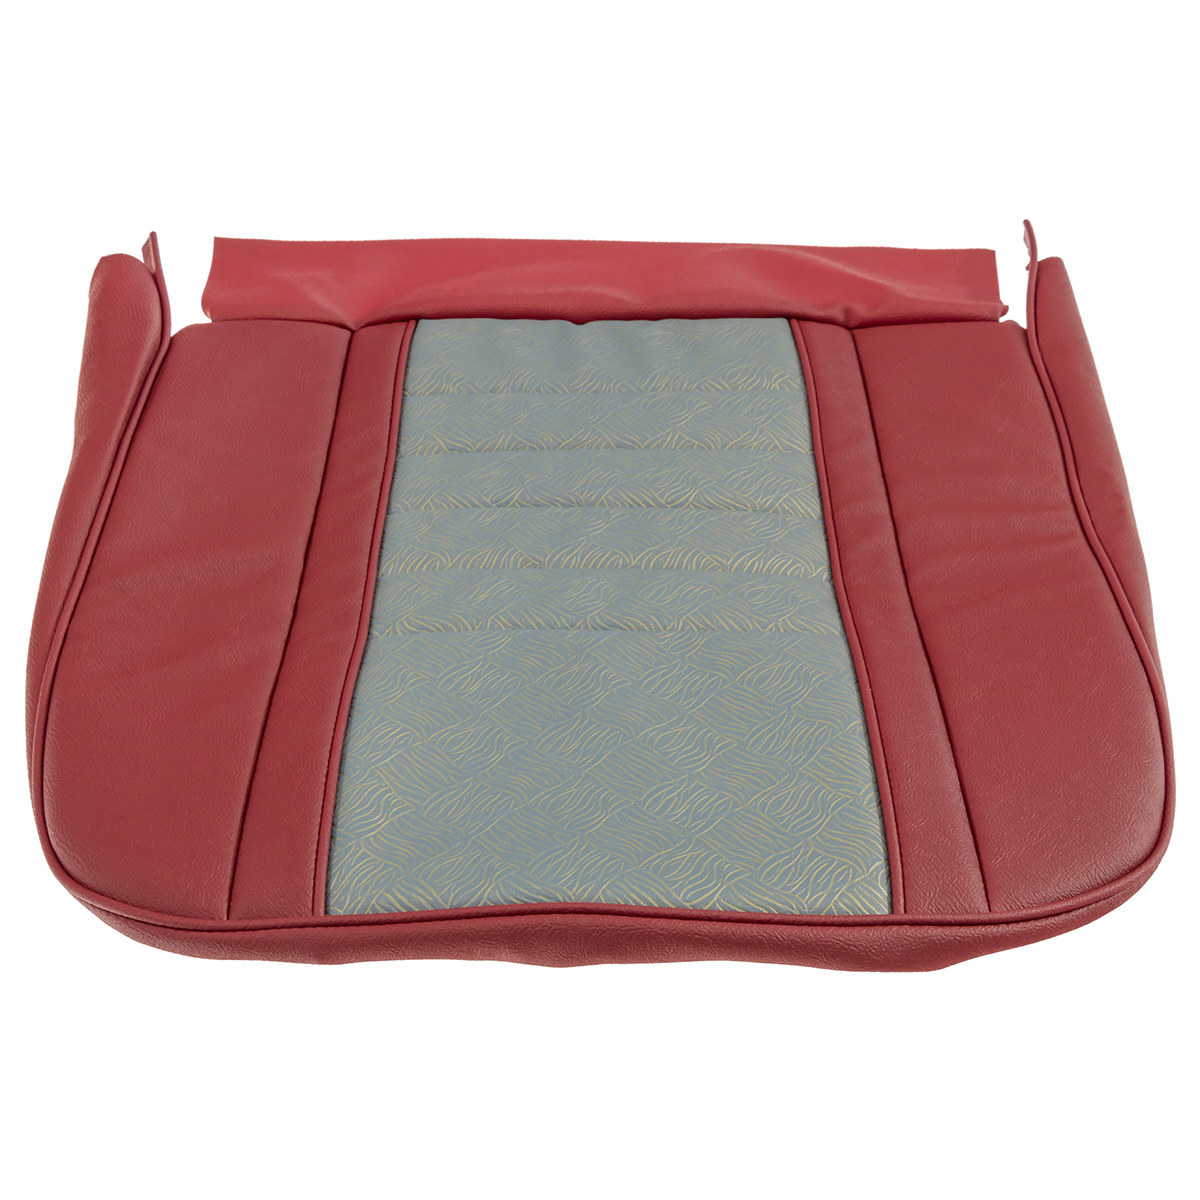 Mini Cooper Mk1 Seat cover Base Vinyl Tartan Red/gold brocade Newton Commercial eBay